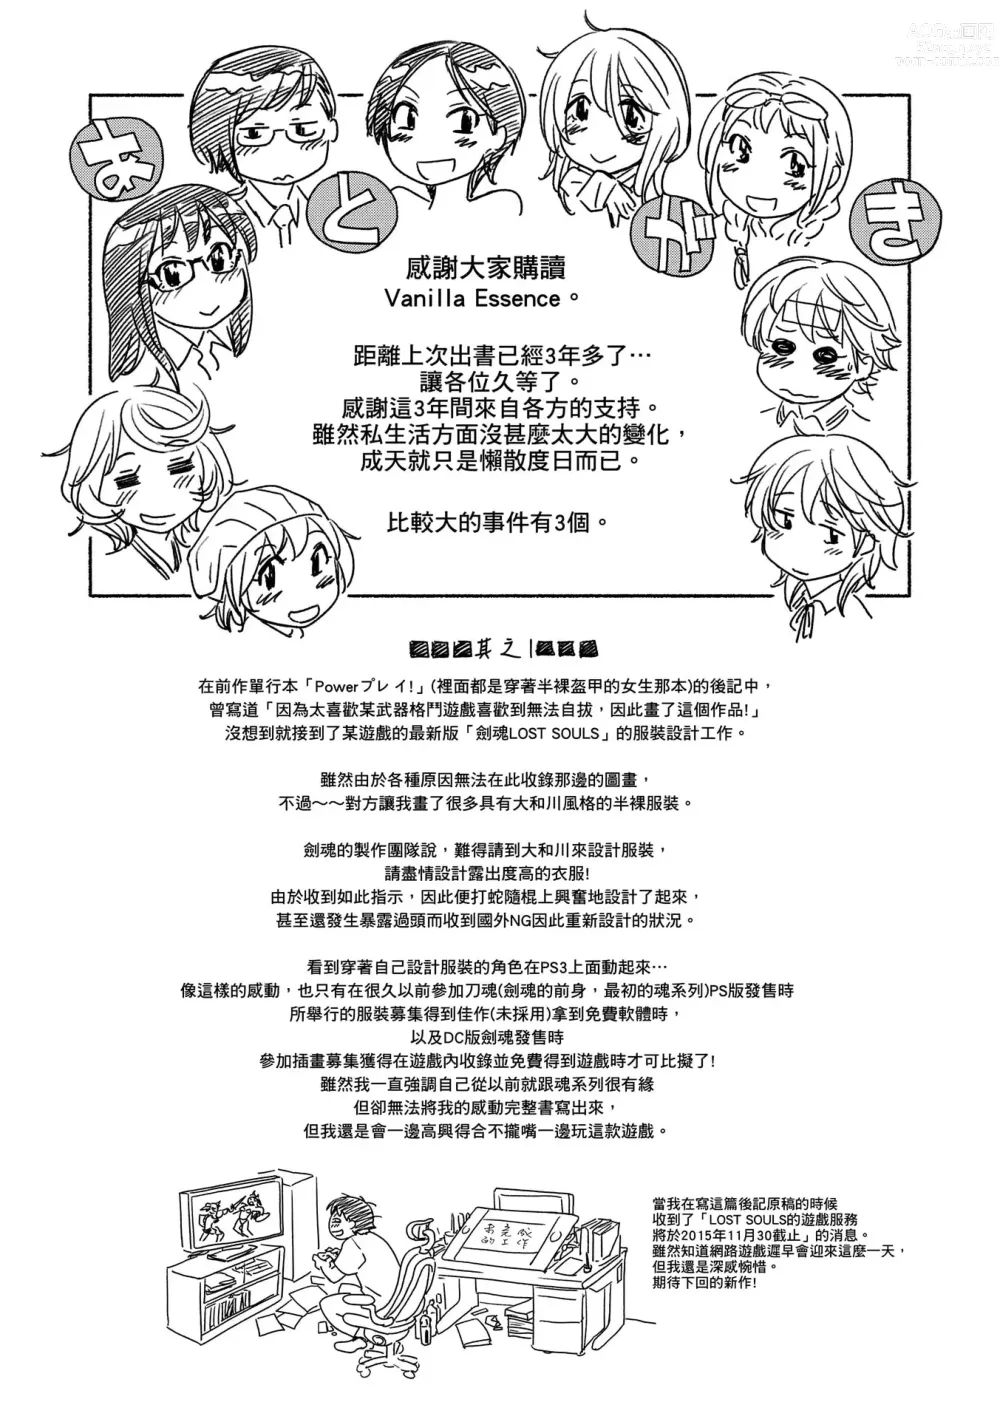 Page 213 of manga 甜美香濃的香草精華 (uncensored)